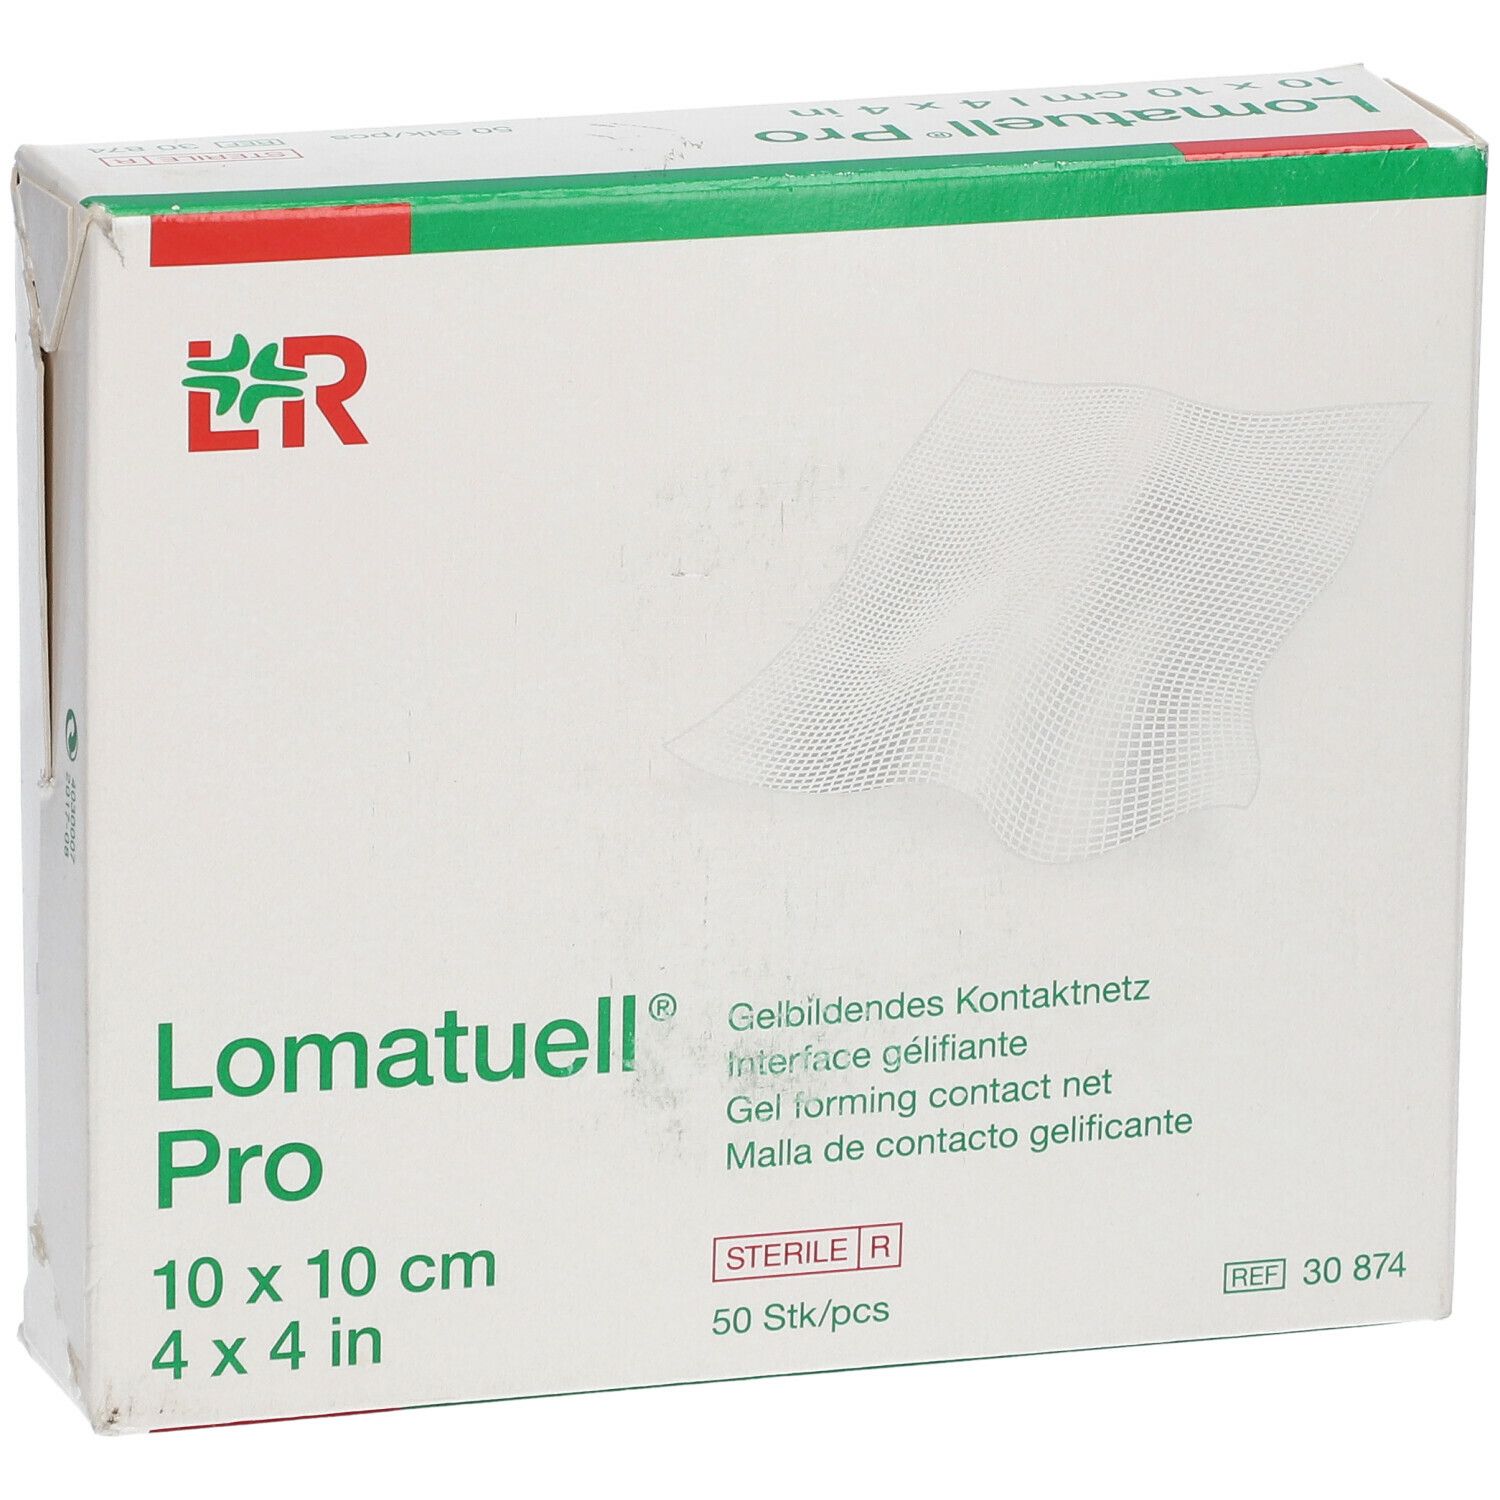 Lomatuell Pro 10 x 10cm 30874